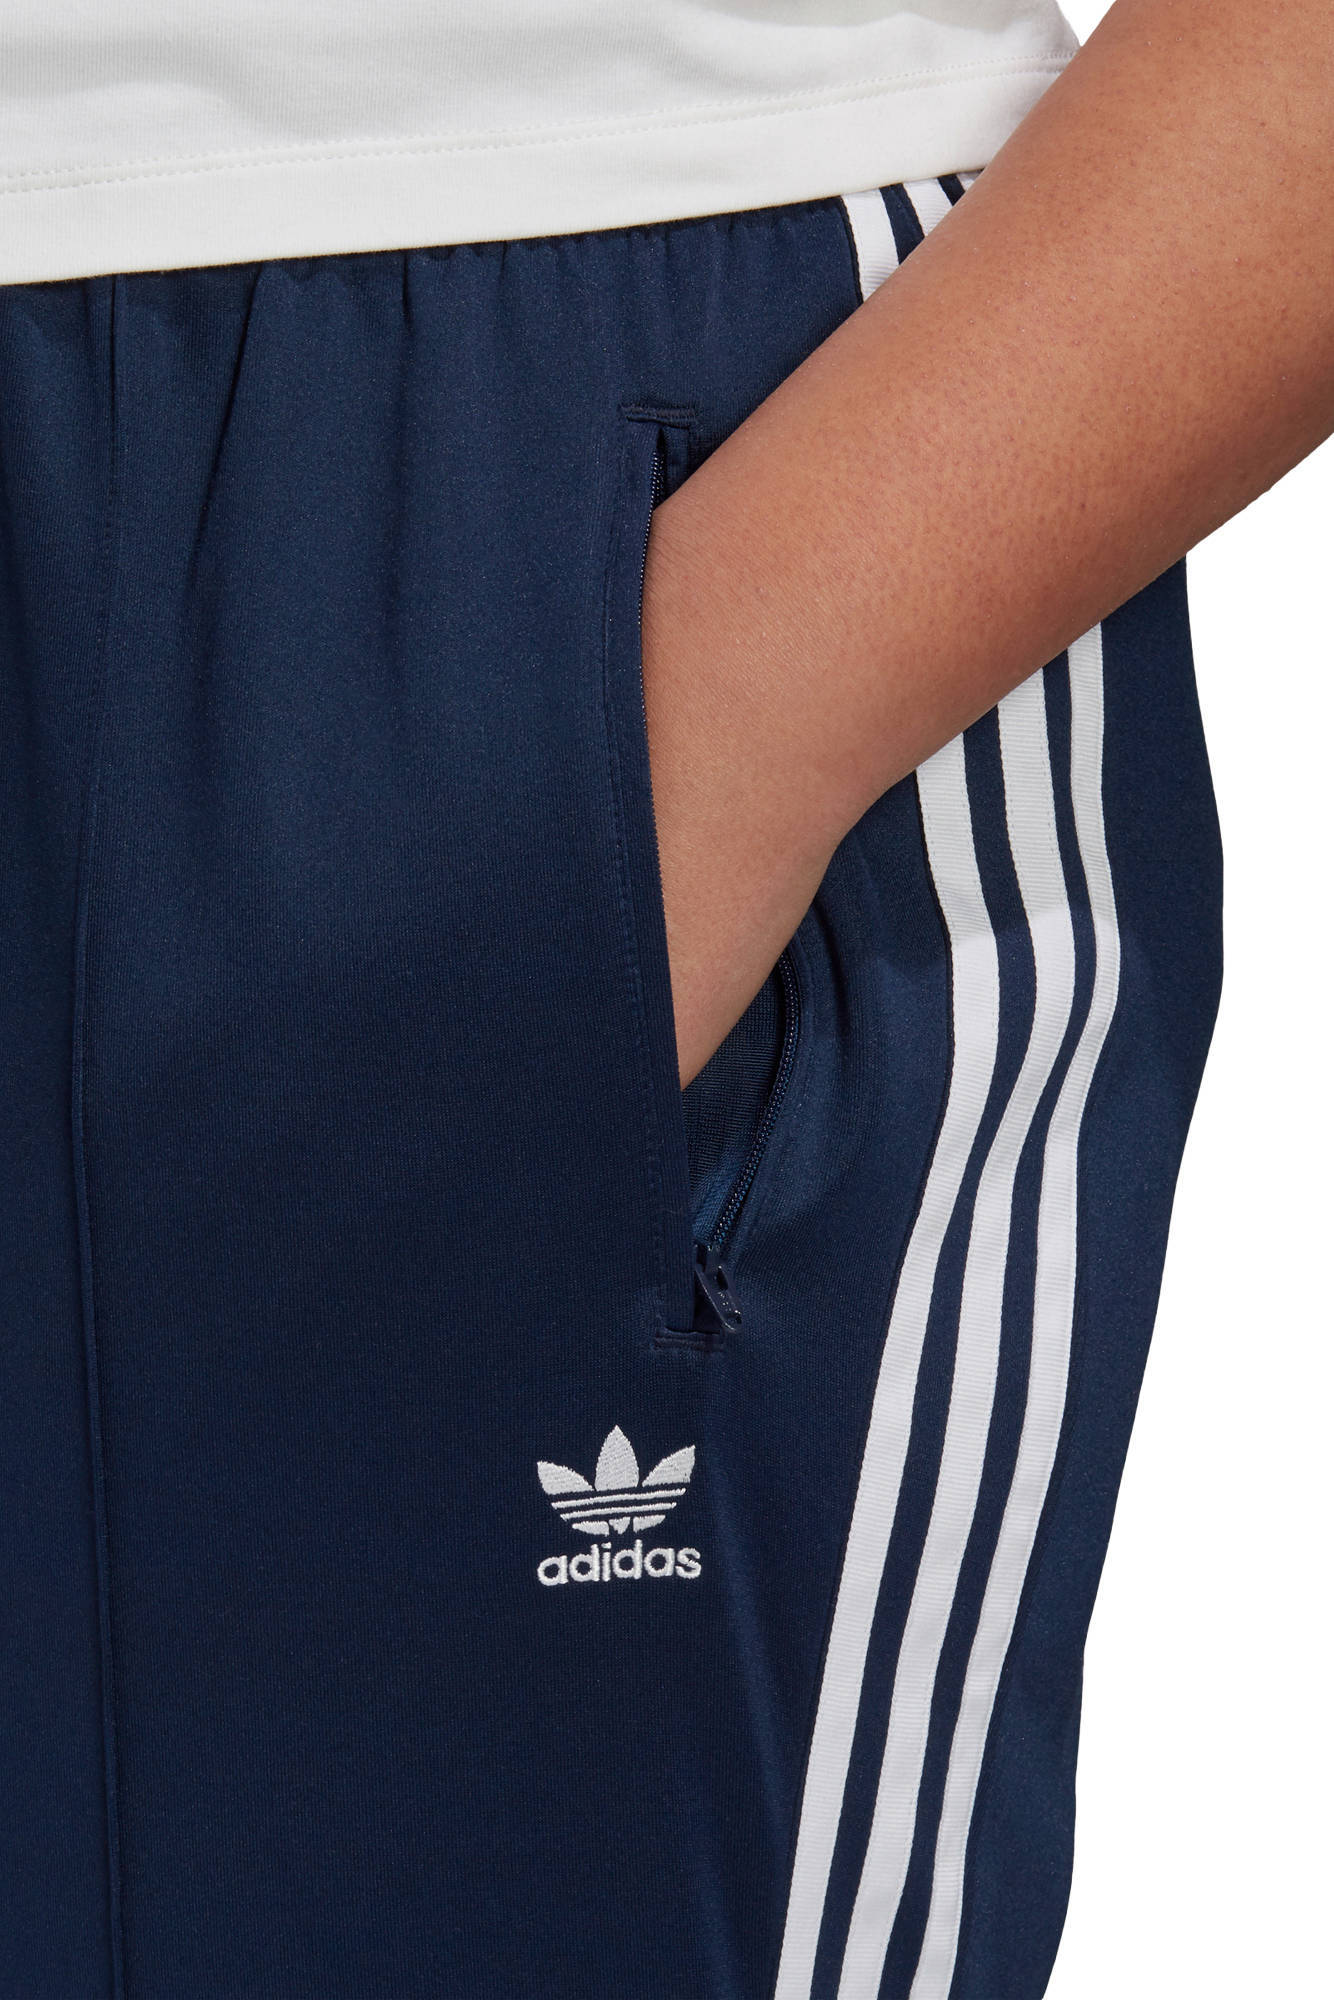 adidas Originals Plus Size joggingbroek donkerblauw/wit | wehkamp